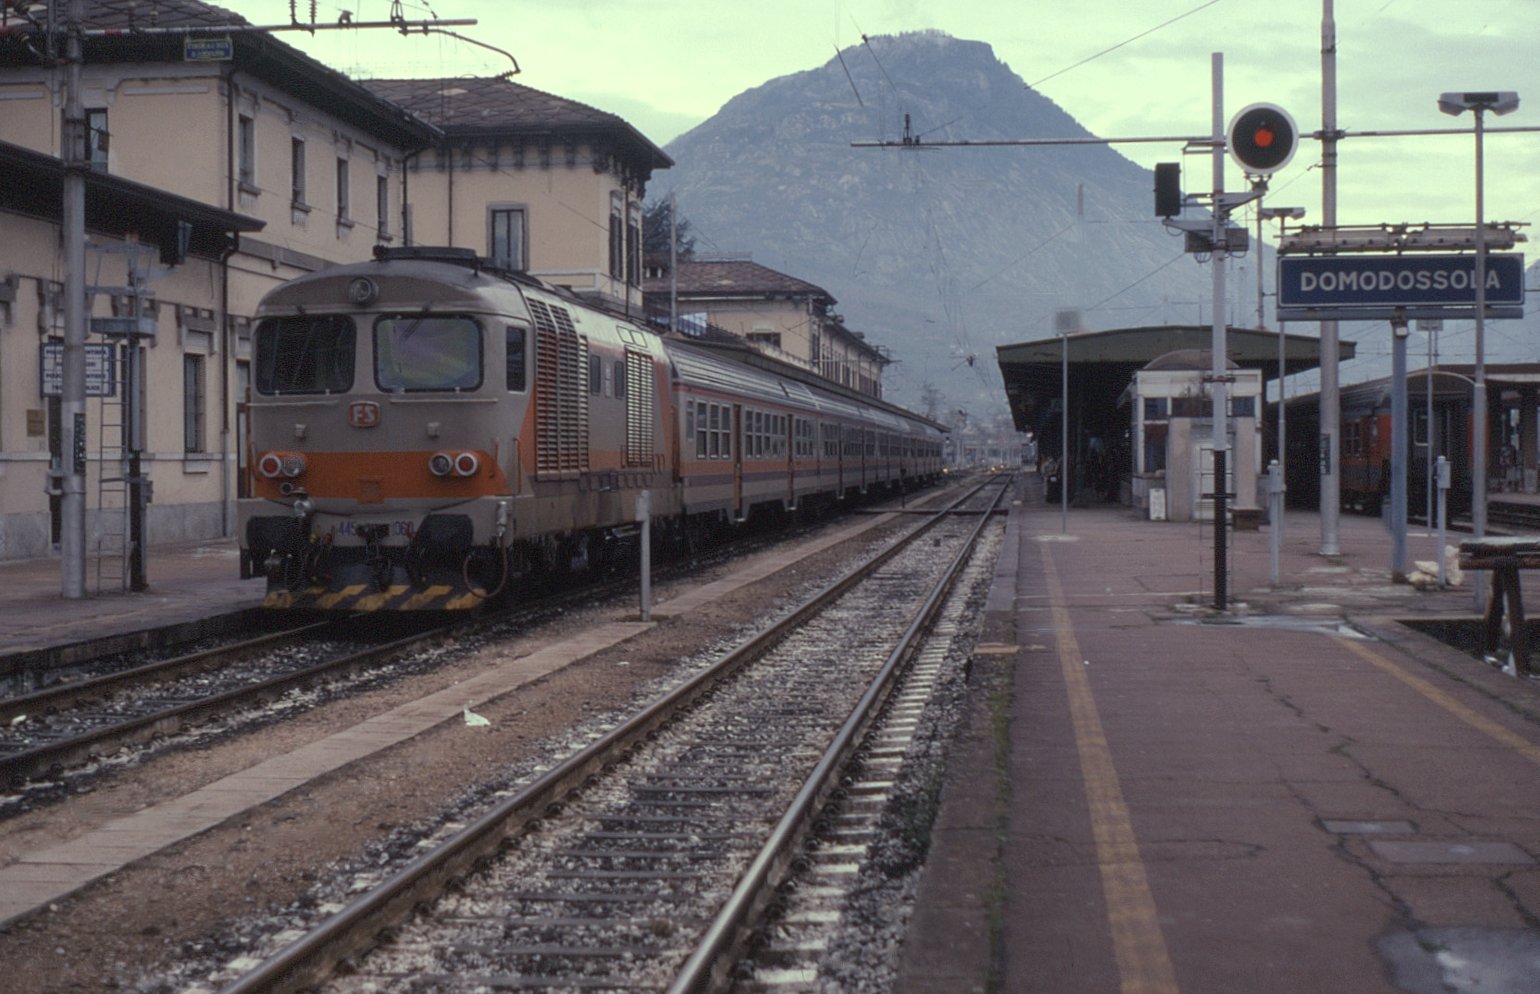 Domodossola train station; philstephenrichards via Flickr Creative Commons